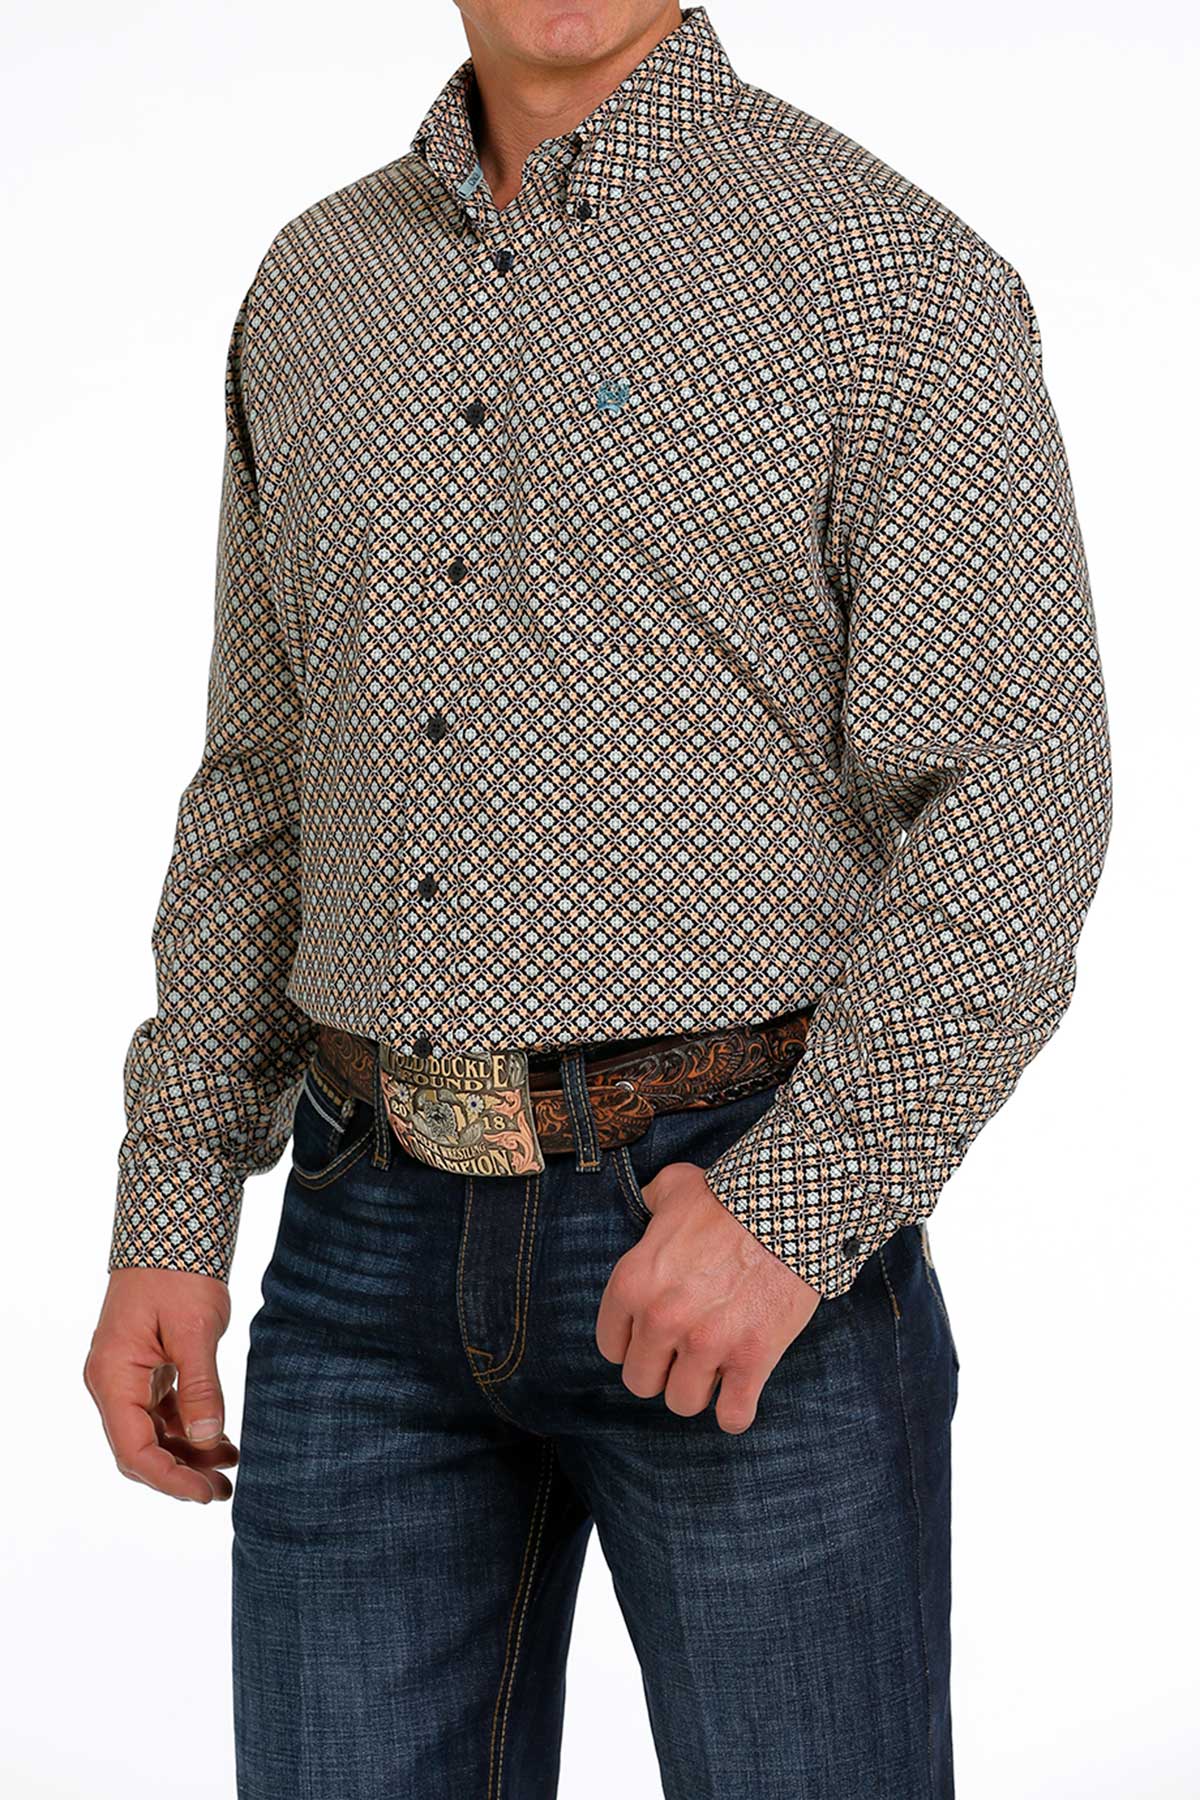 CINCH MEN'S L/S PRINT SHIRT - NAVY - Nate's Western Wear